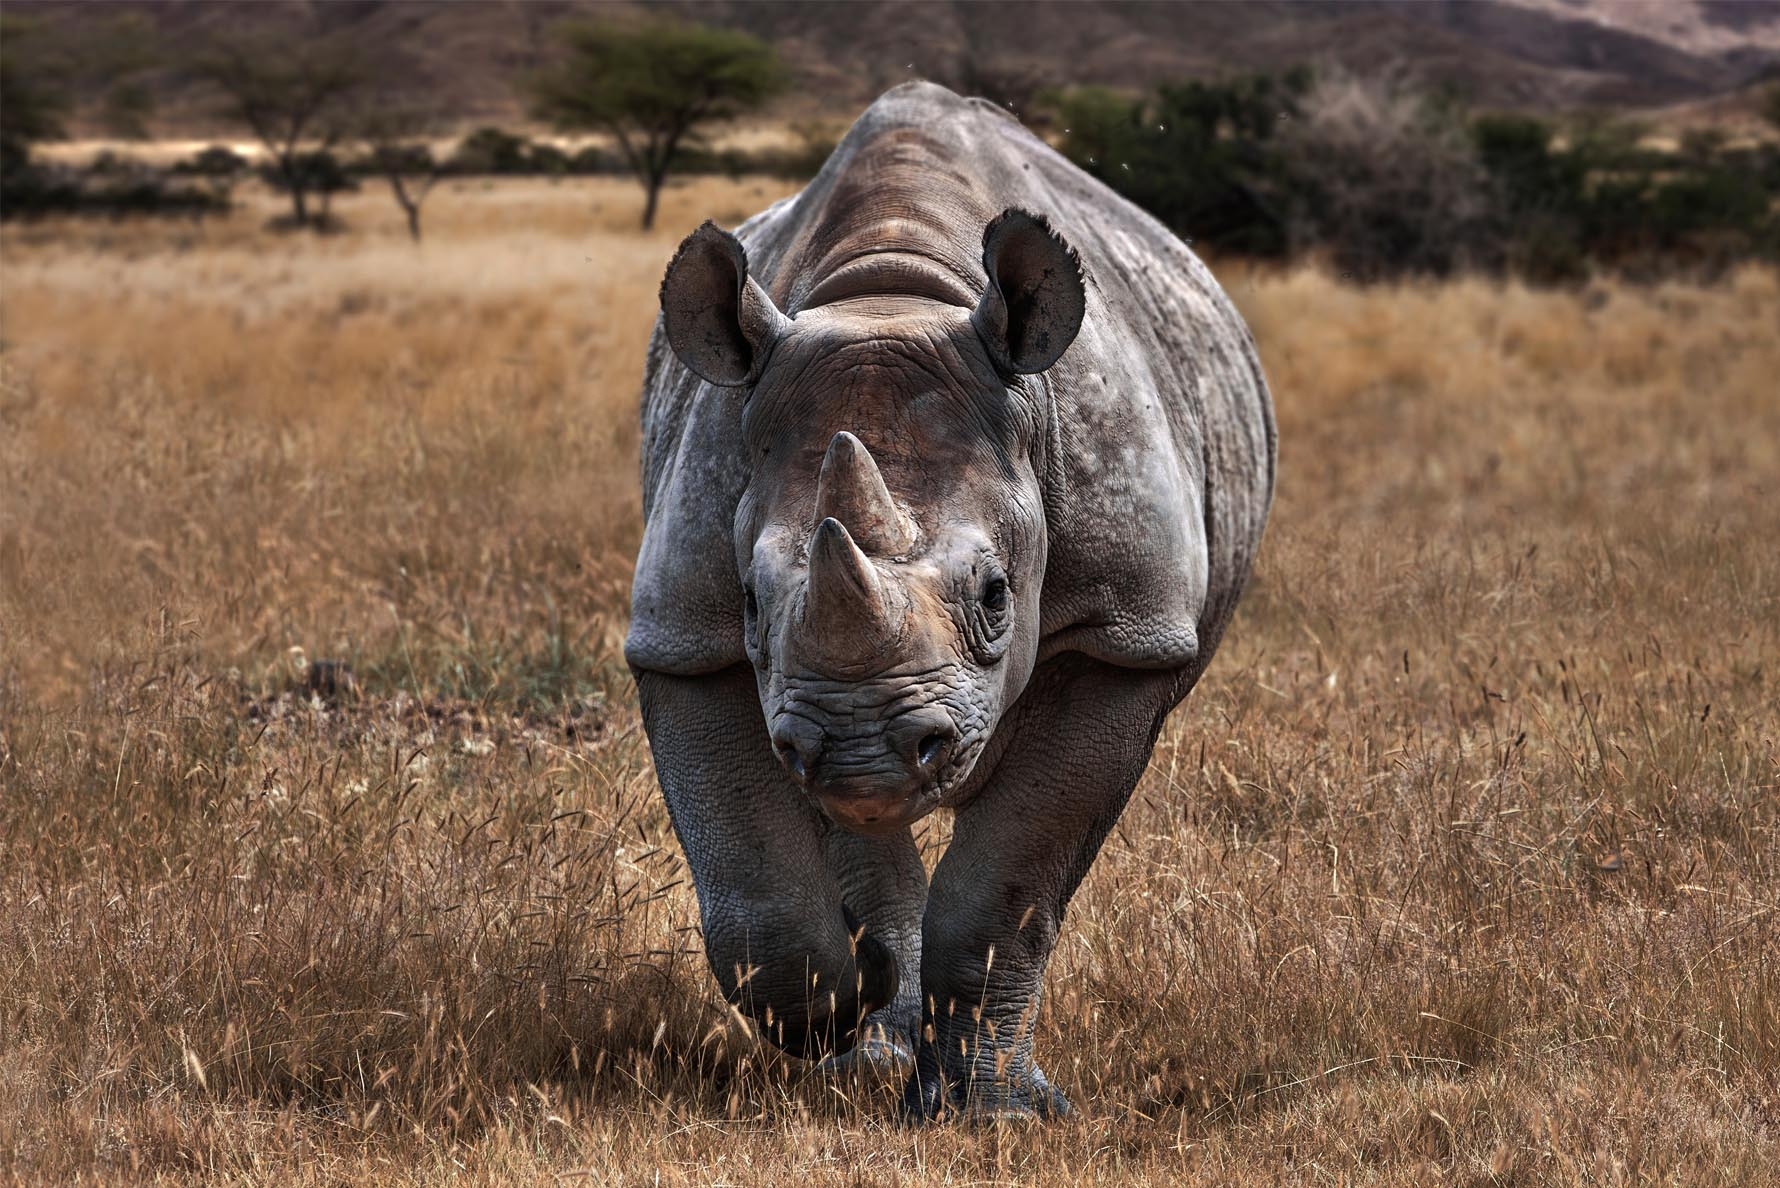 Black rhino in Namibia, Etosha National Park